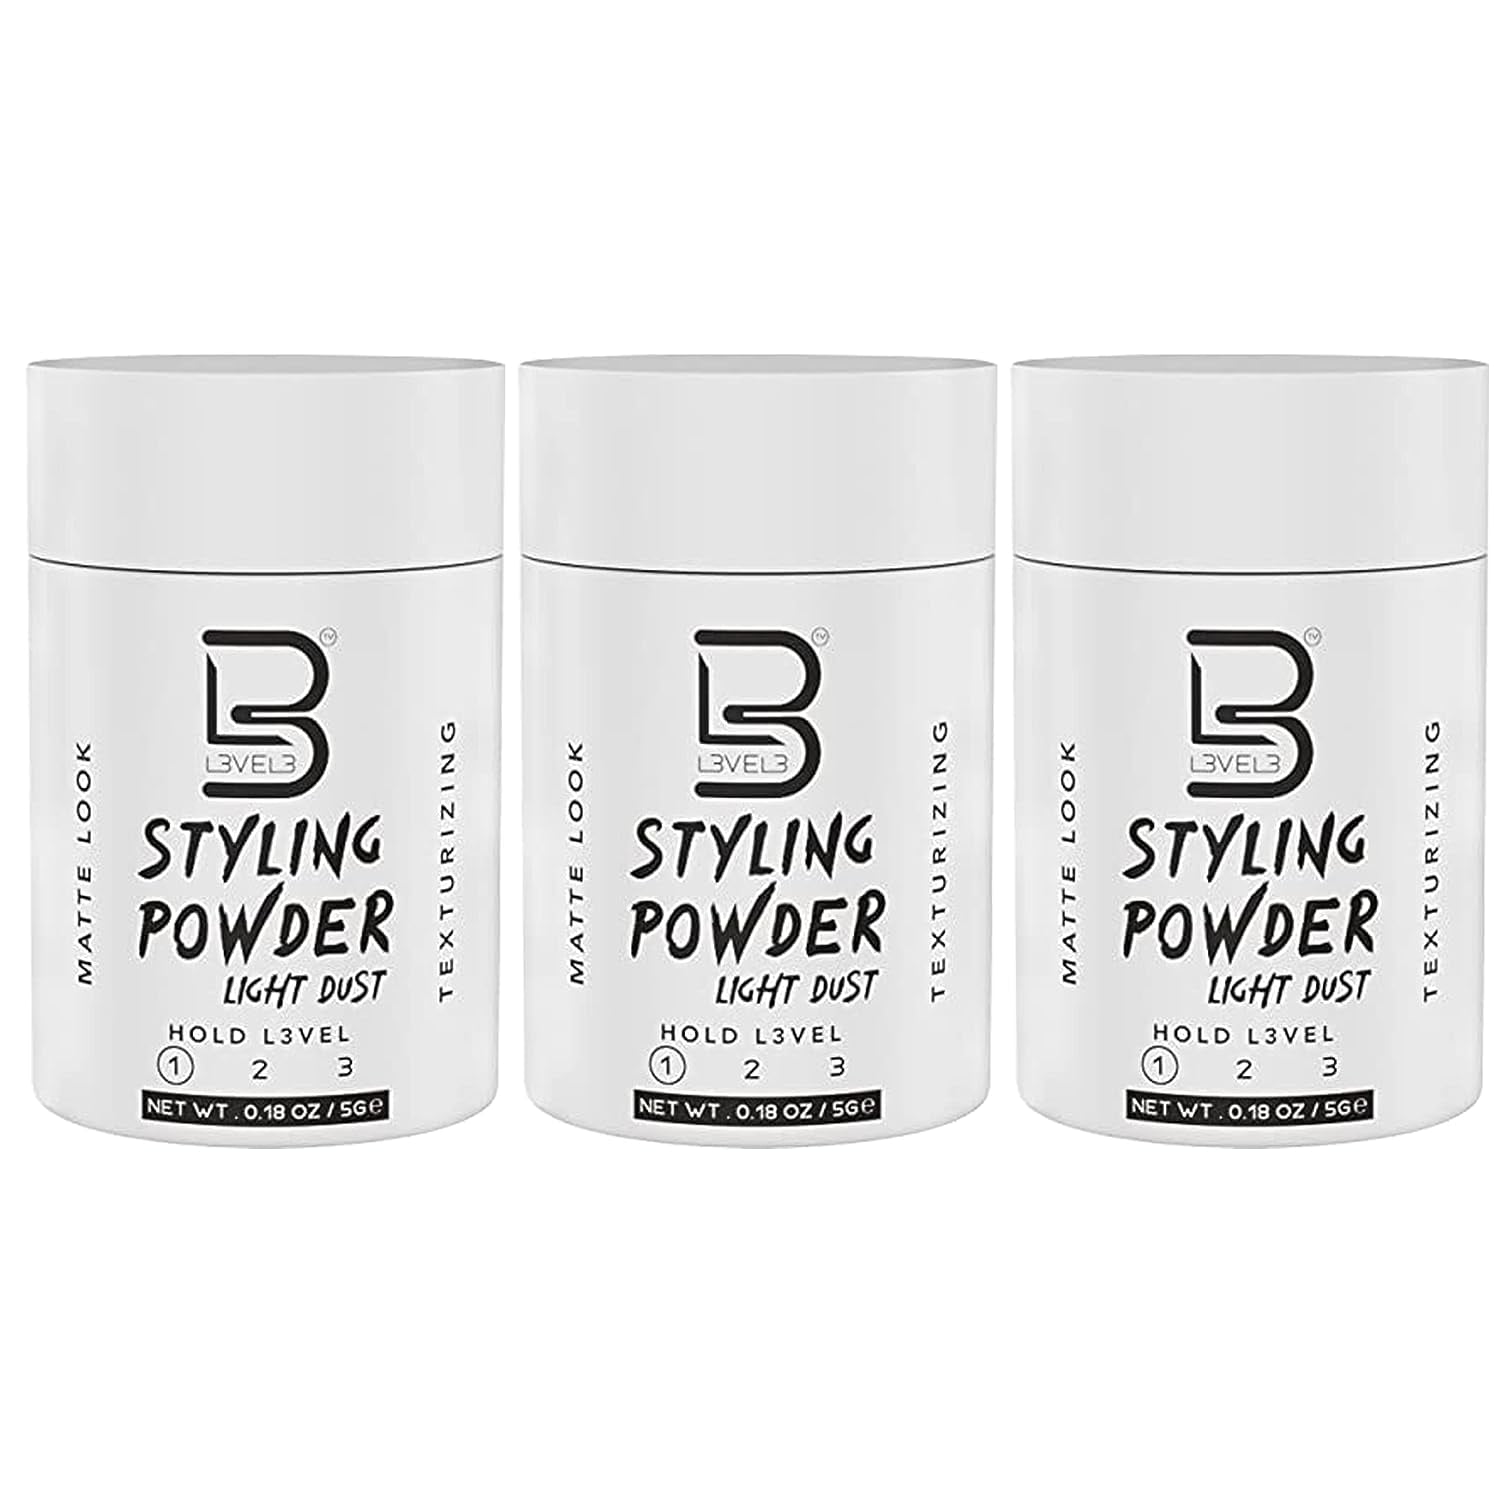 L3vel 3 Styling Powder  Mens hairstyles, Vitamin water bottle